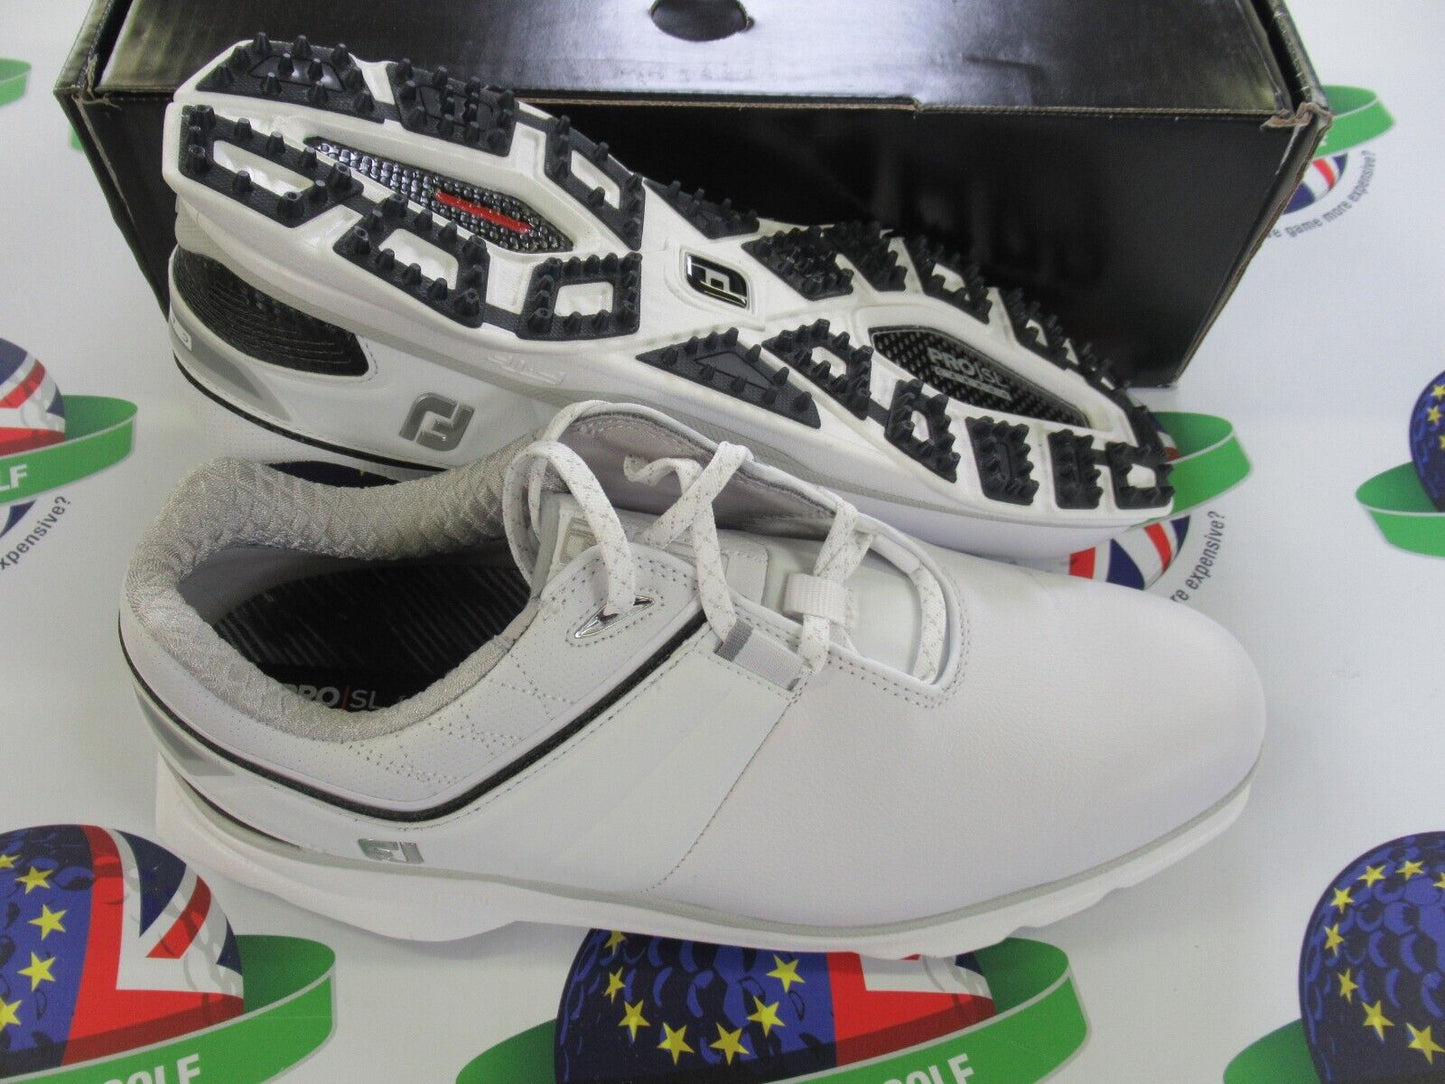 footjoy pro sl carbon waterproof golf shoes 53079k white/black size 9.5 medium